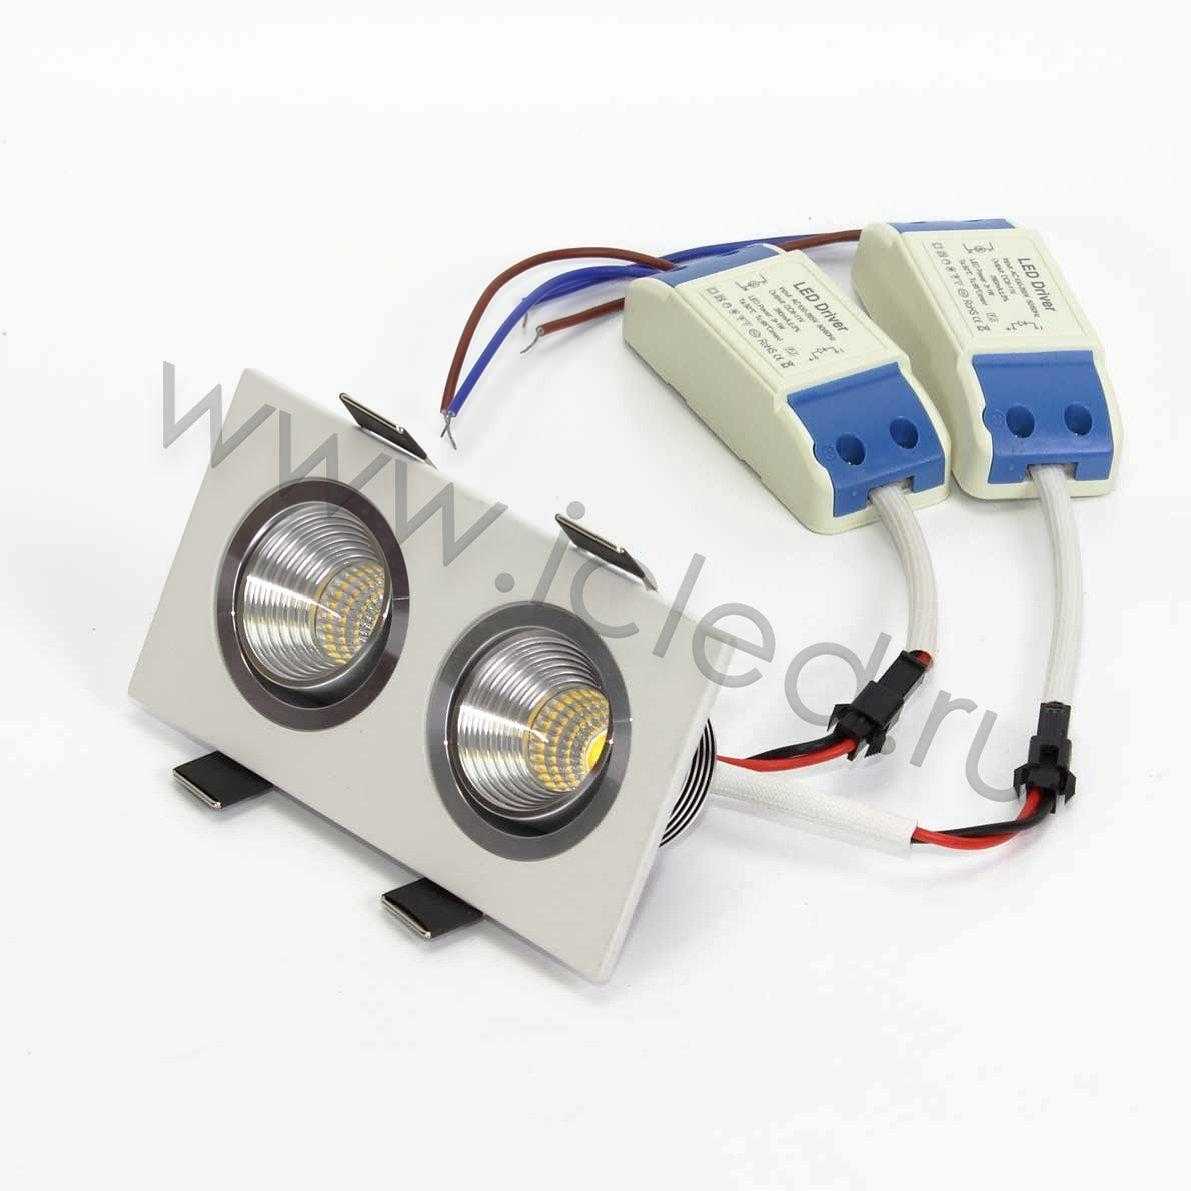 Светодиодные светильники Светодиодный светильник встраиваемый 65 series white housing BW139 (6W,220V,day white)